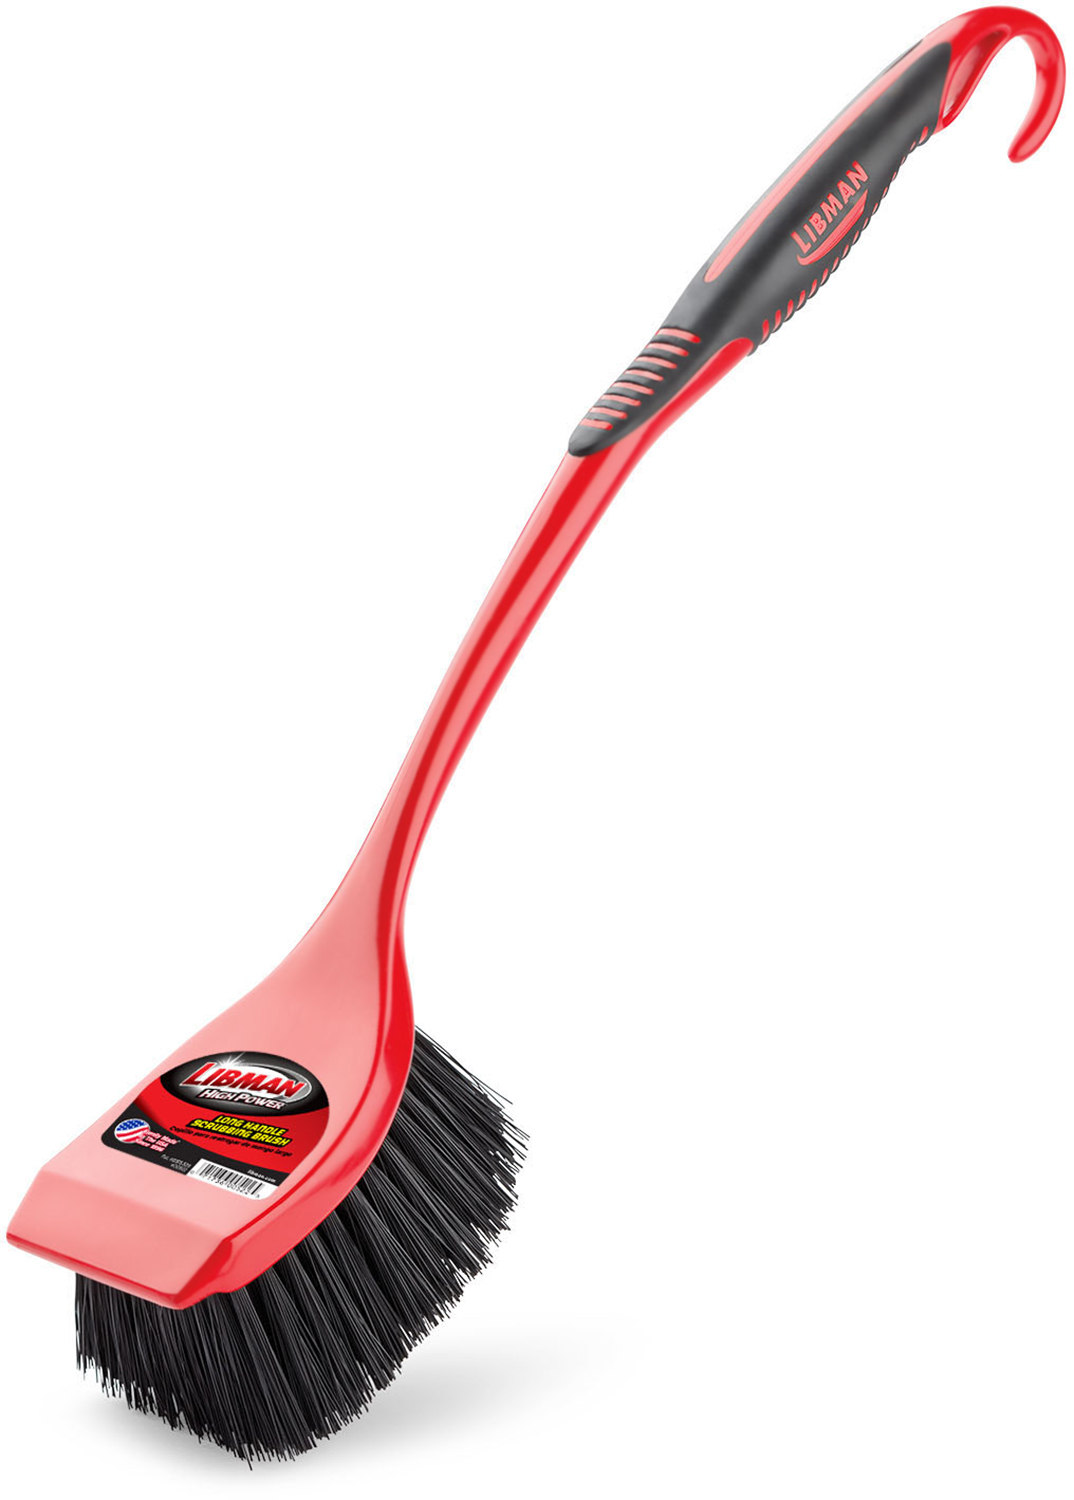 Libman Long Handle Utility Scrub Brush Red Black - image 1 of 11